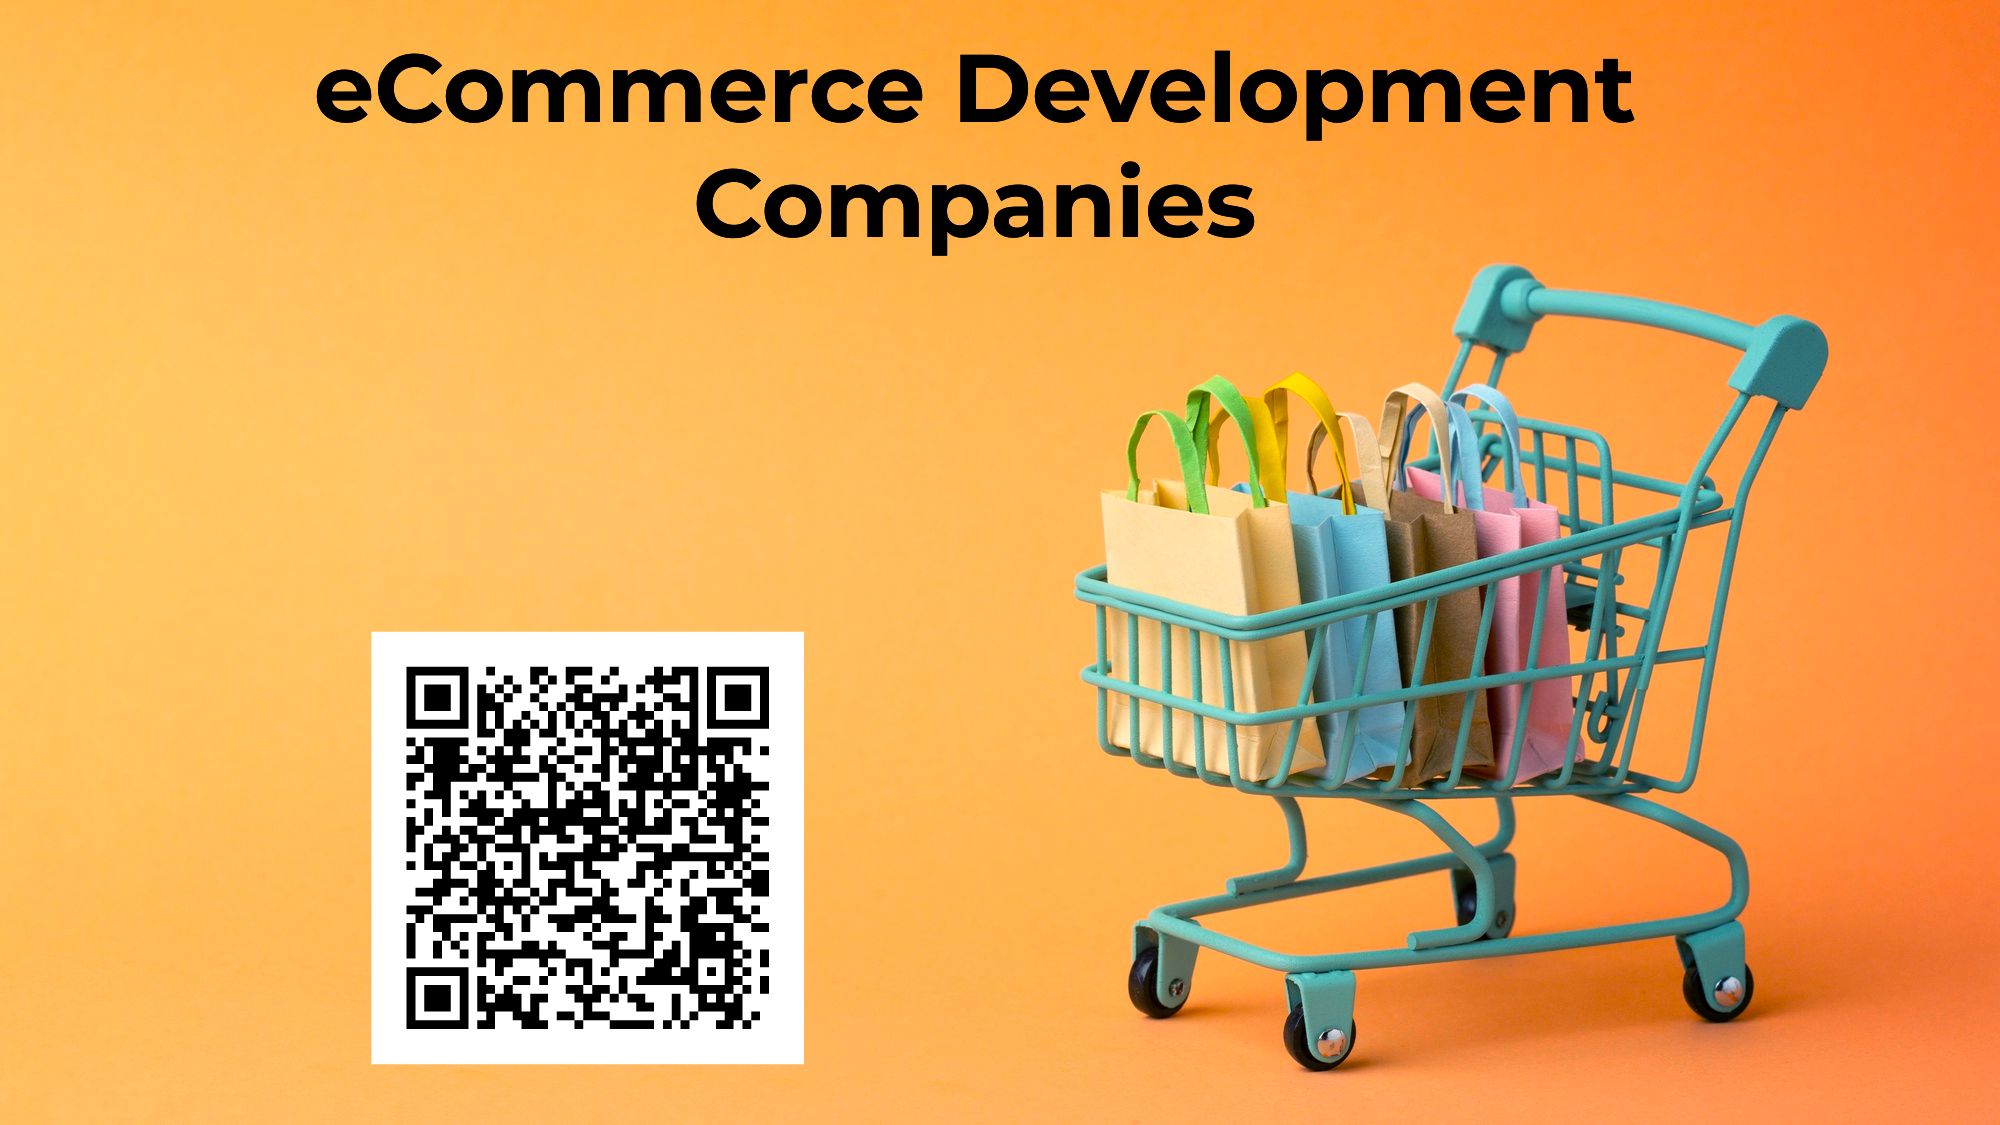 Top eCommerce Development Companies